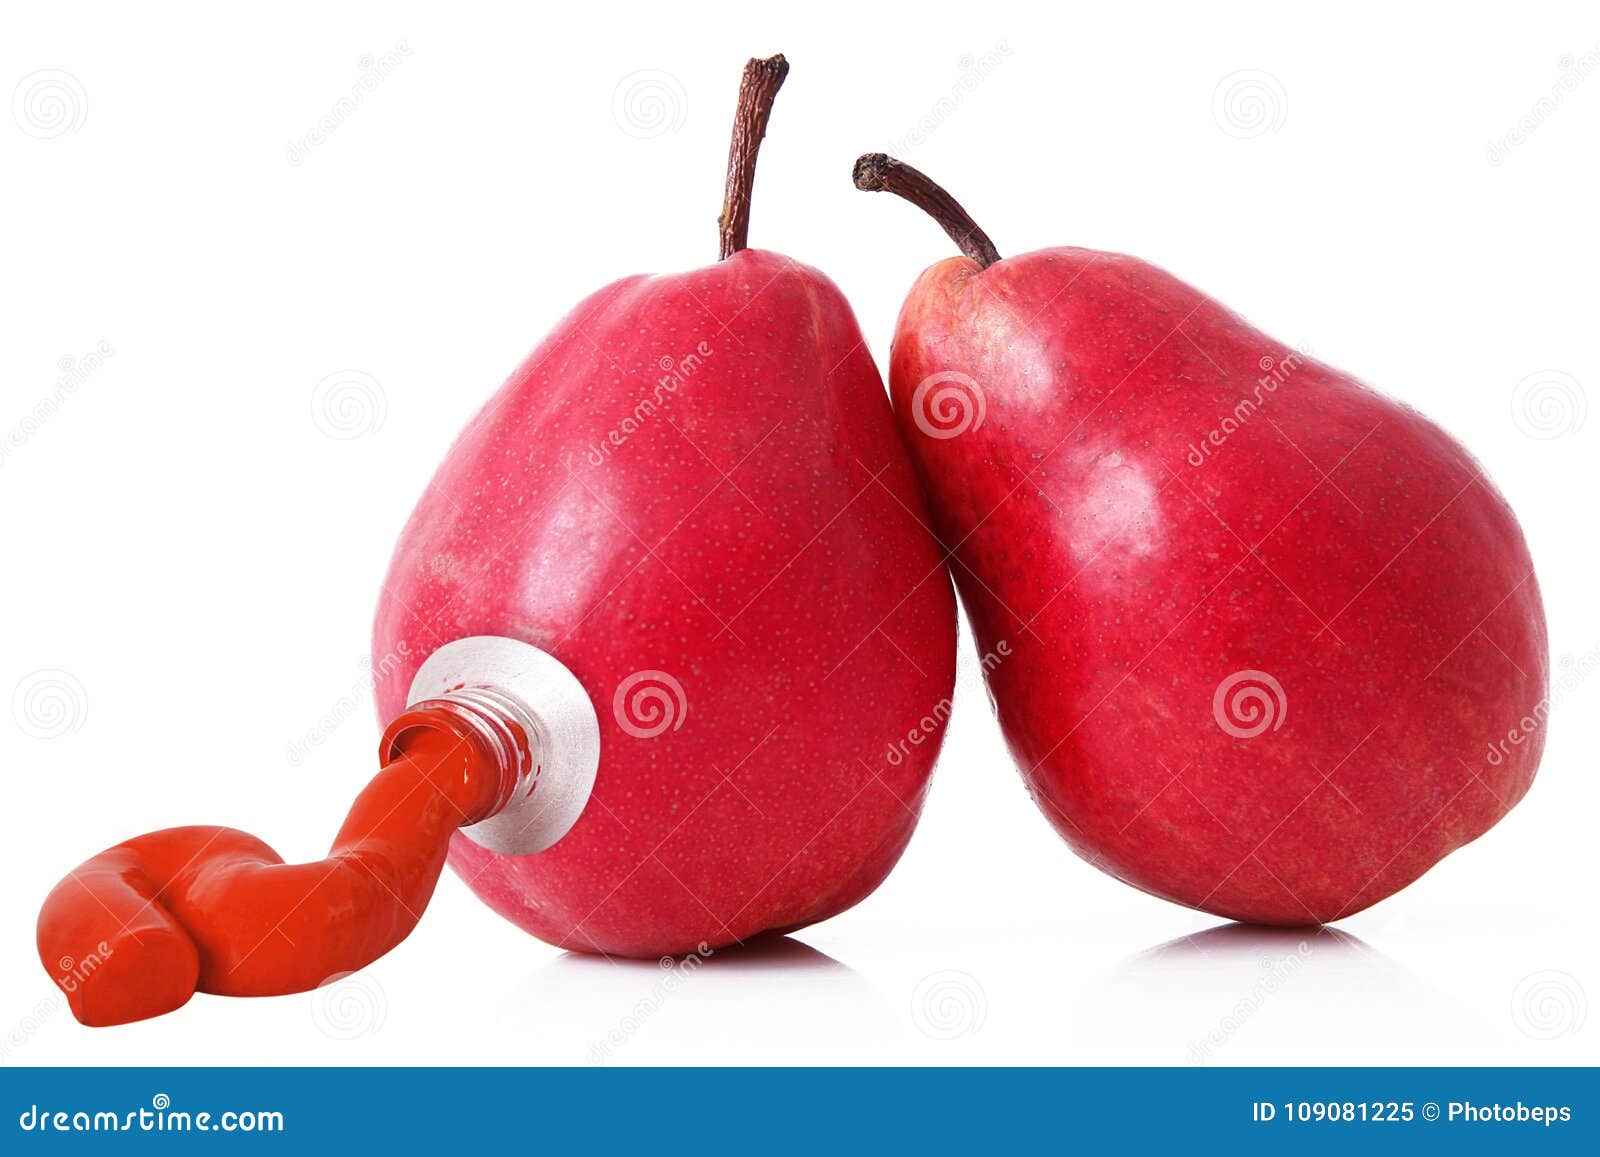 Pear like. Люблю груши. Винная груша красная и белая. Любимый груша. Груша господина Спрутса.